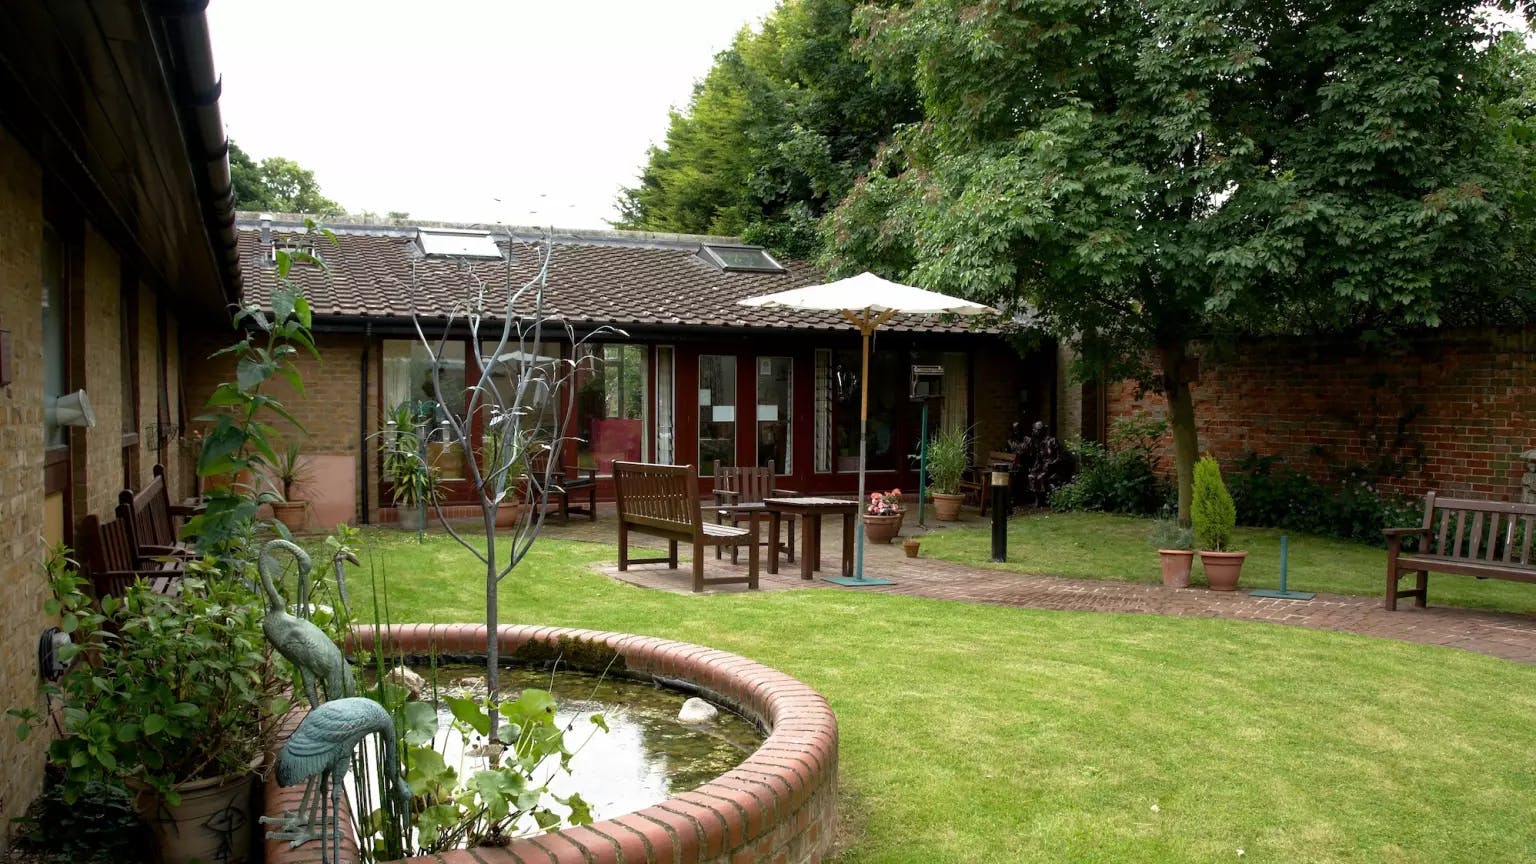 Garden Richard Cox House care home in Royston, Hertfordshire